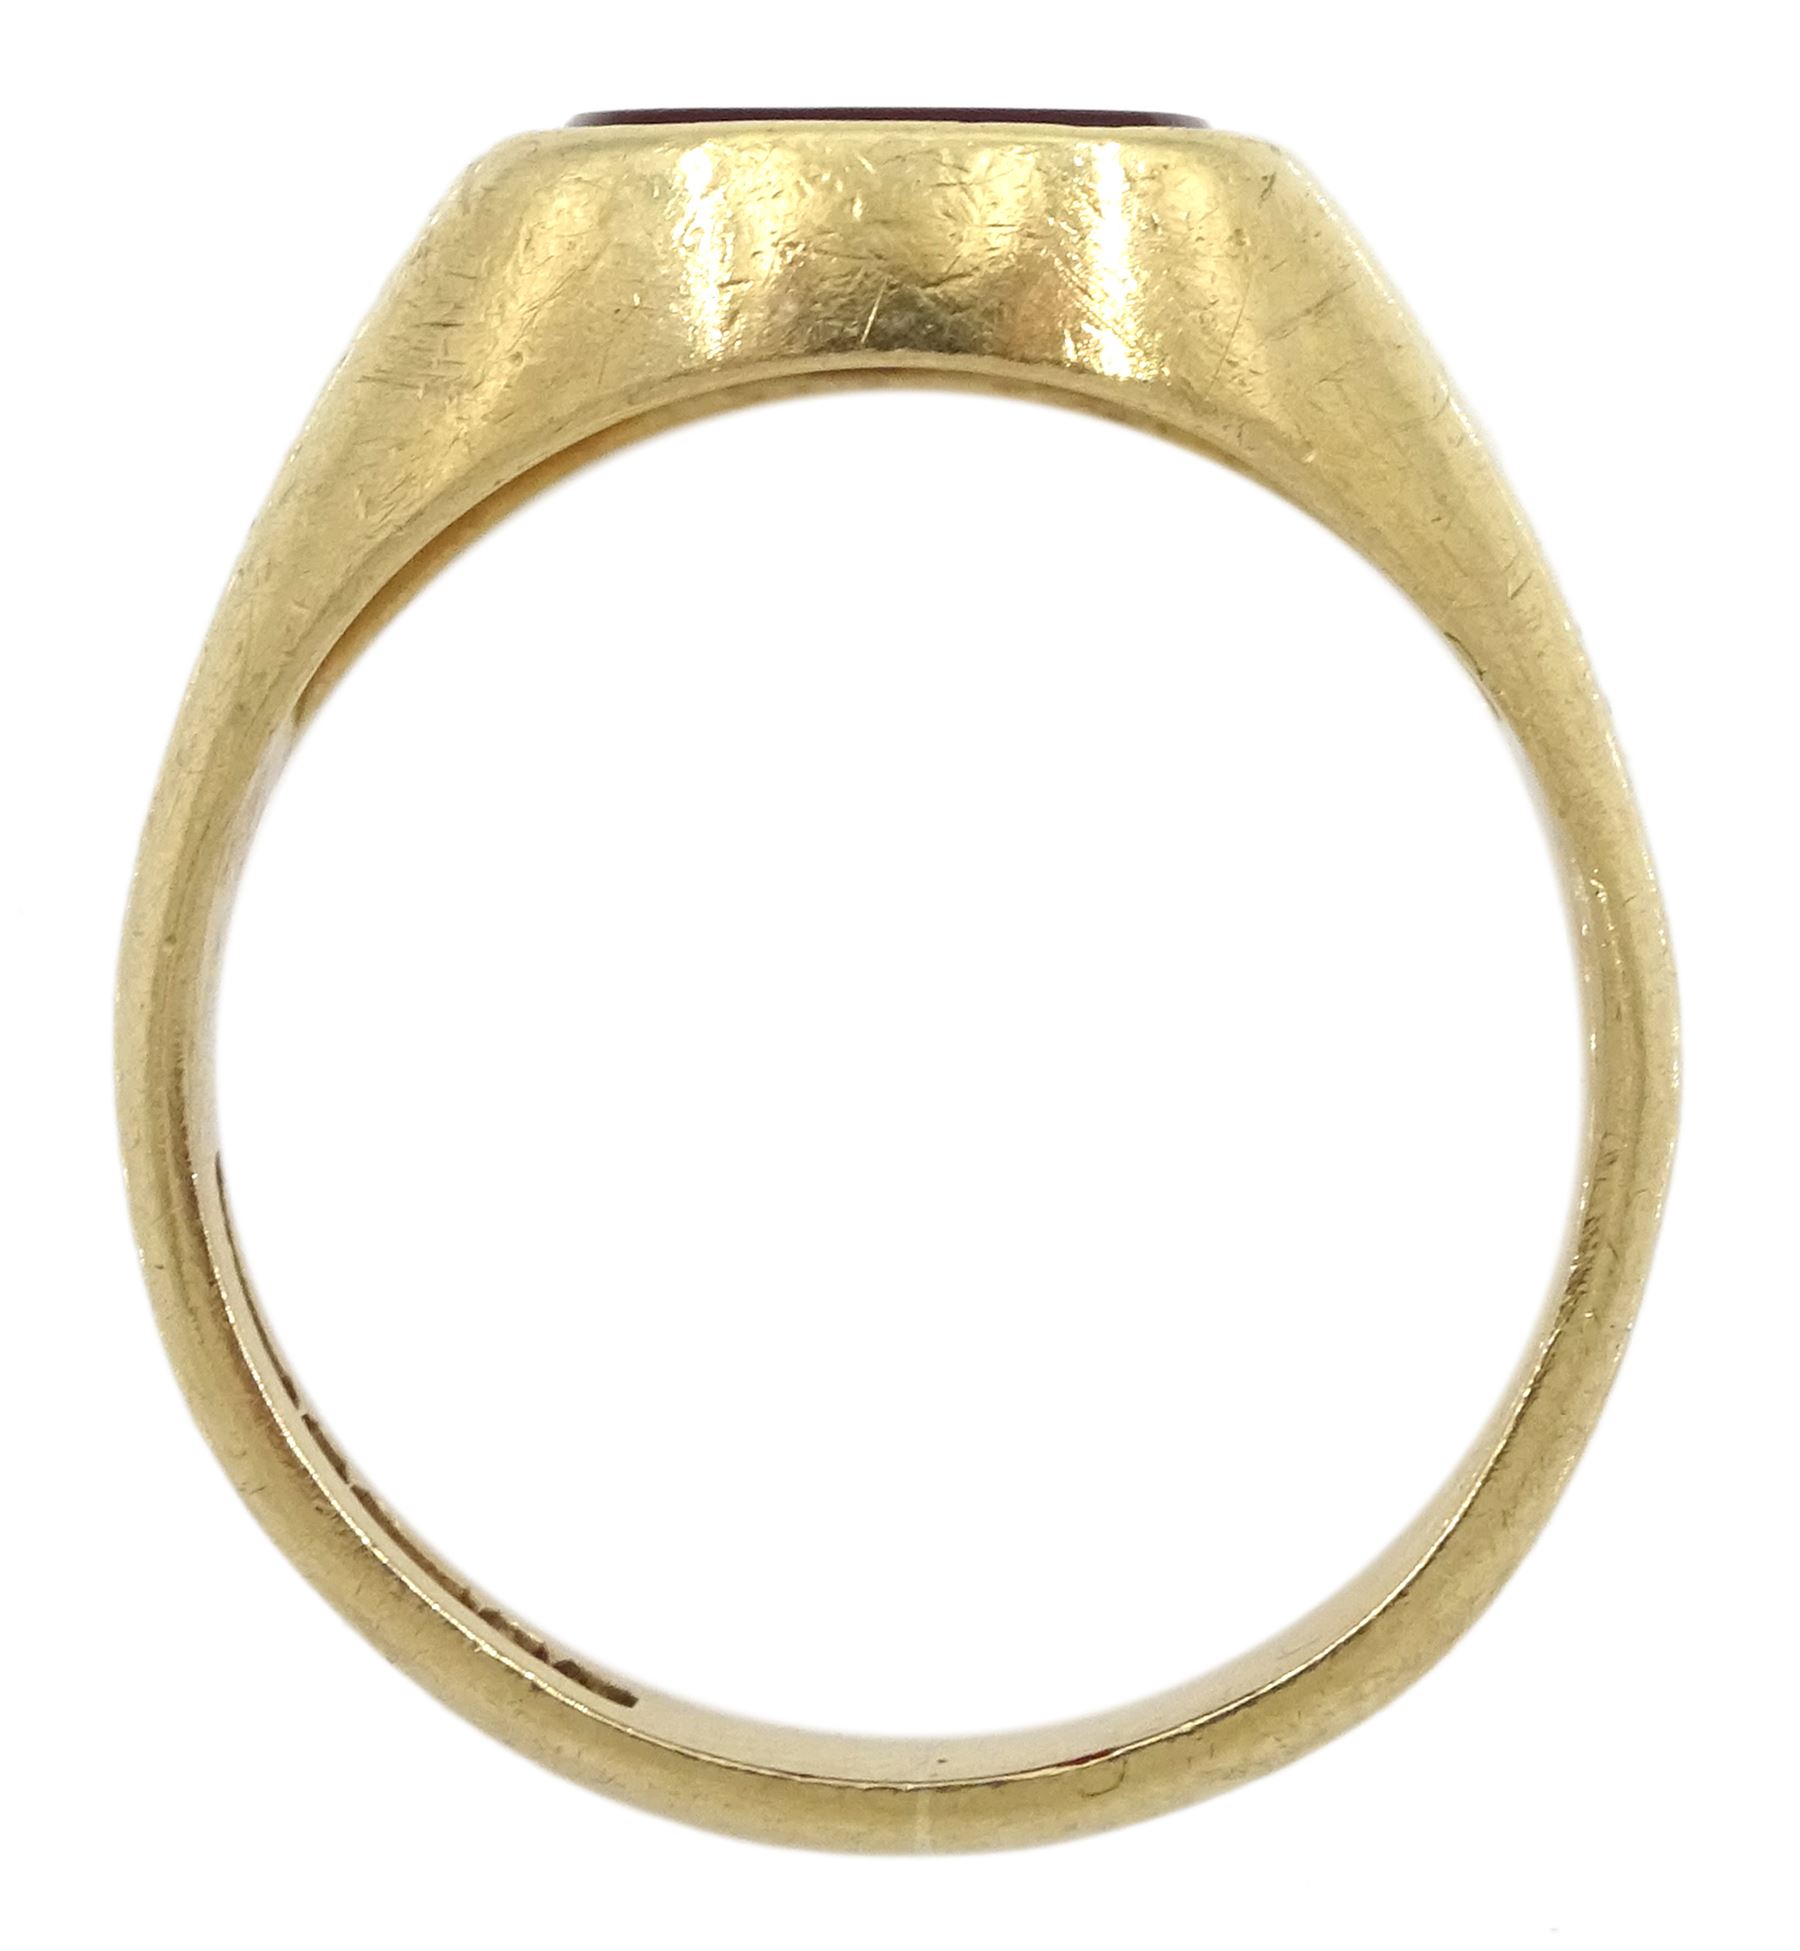 9ct gold single stone carnelian signet ring - Image 4 of 4